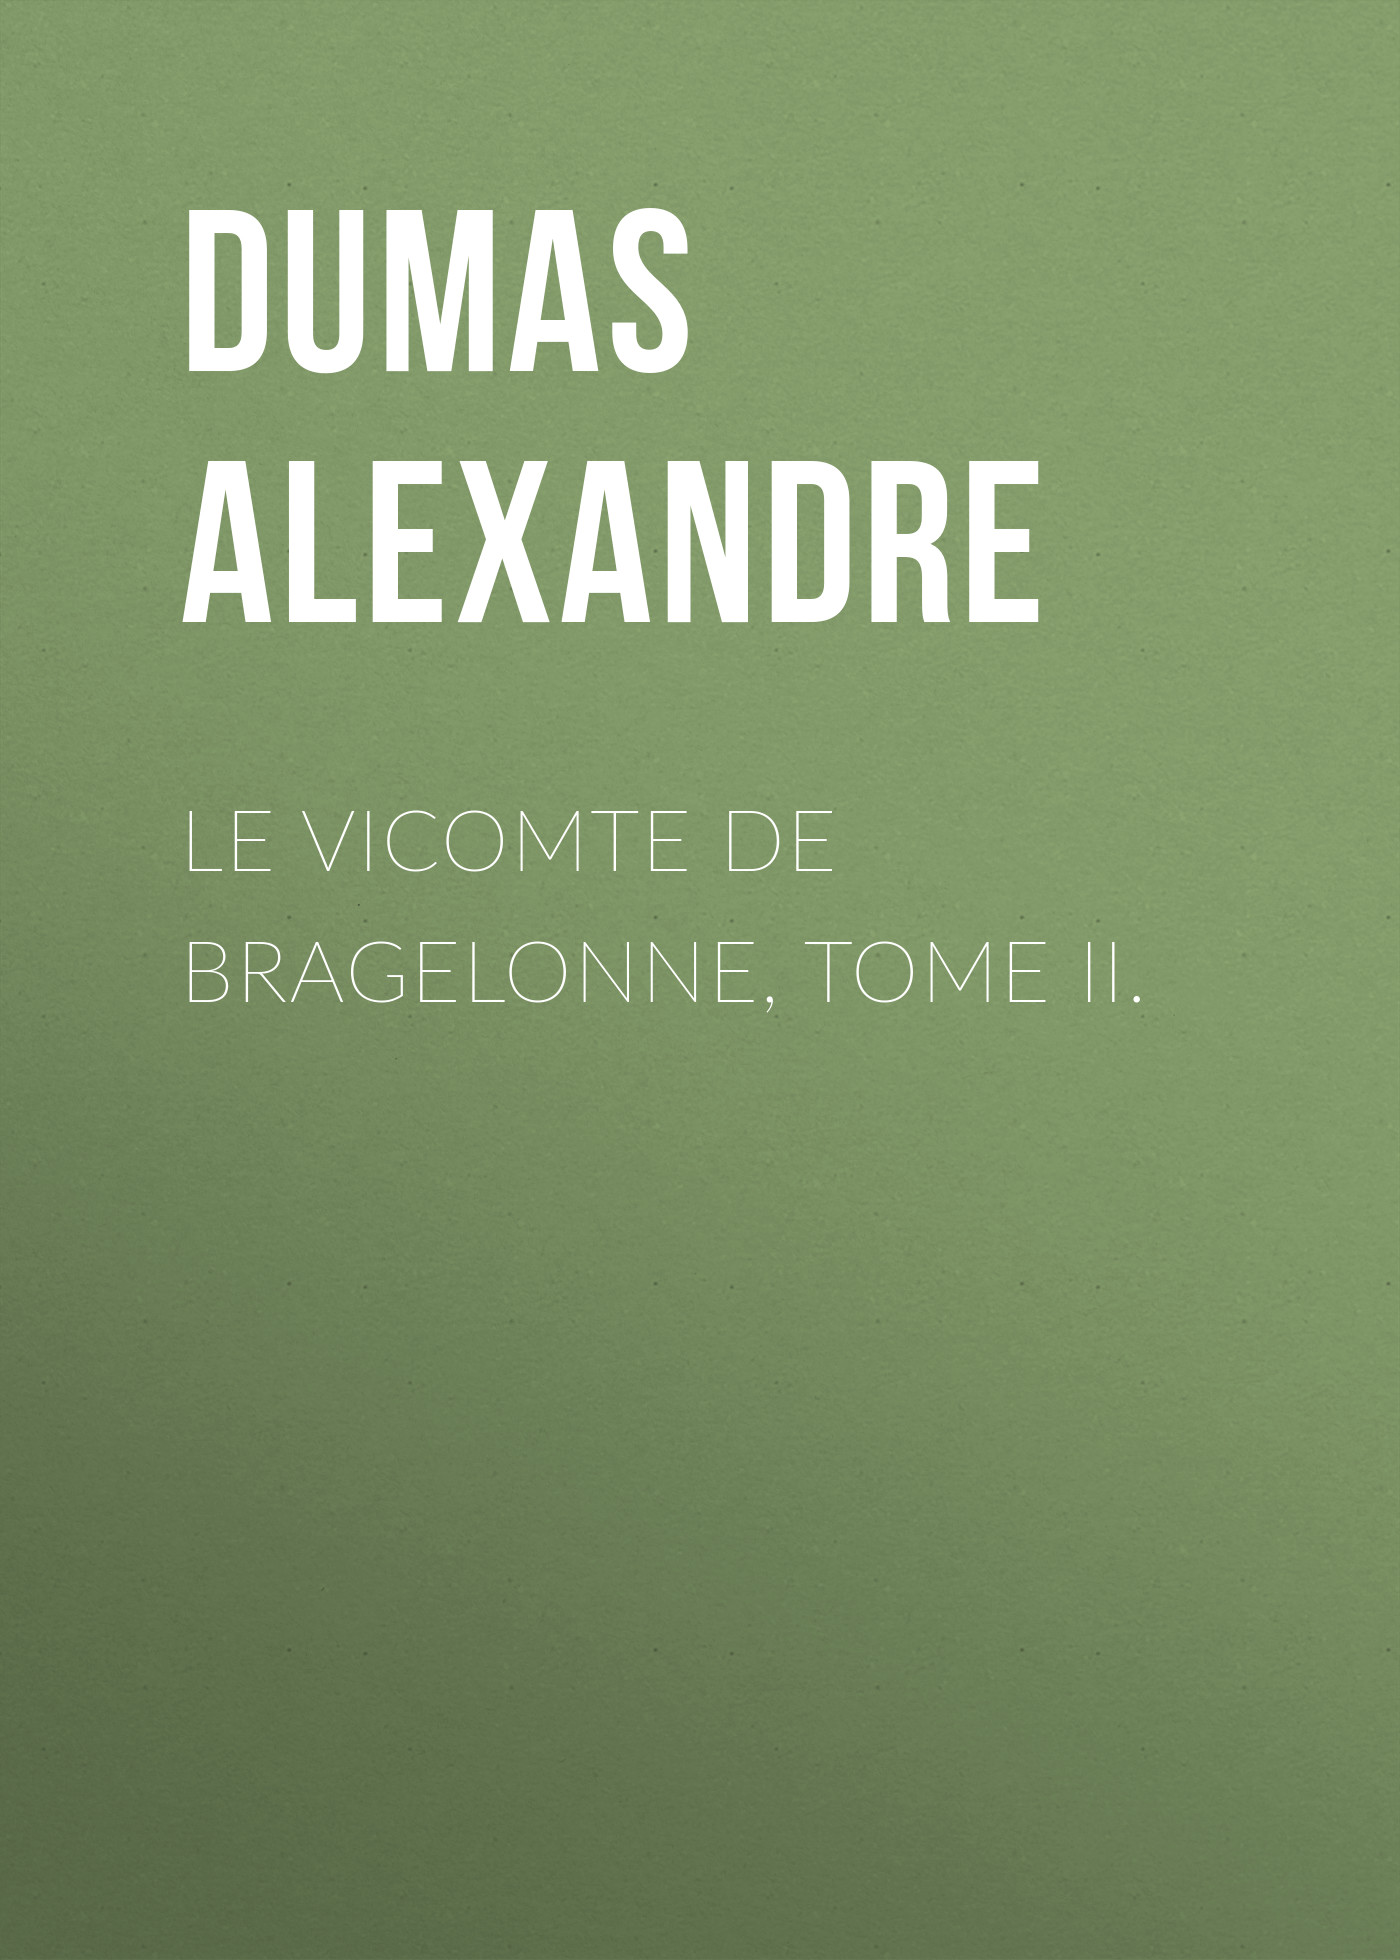 Le vicomte de Bragelonne, Tome II.